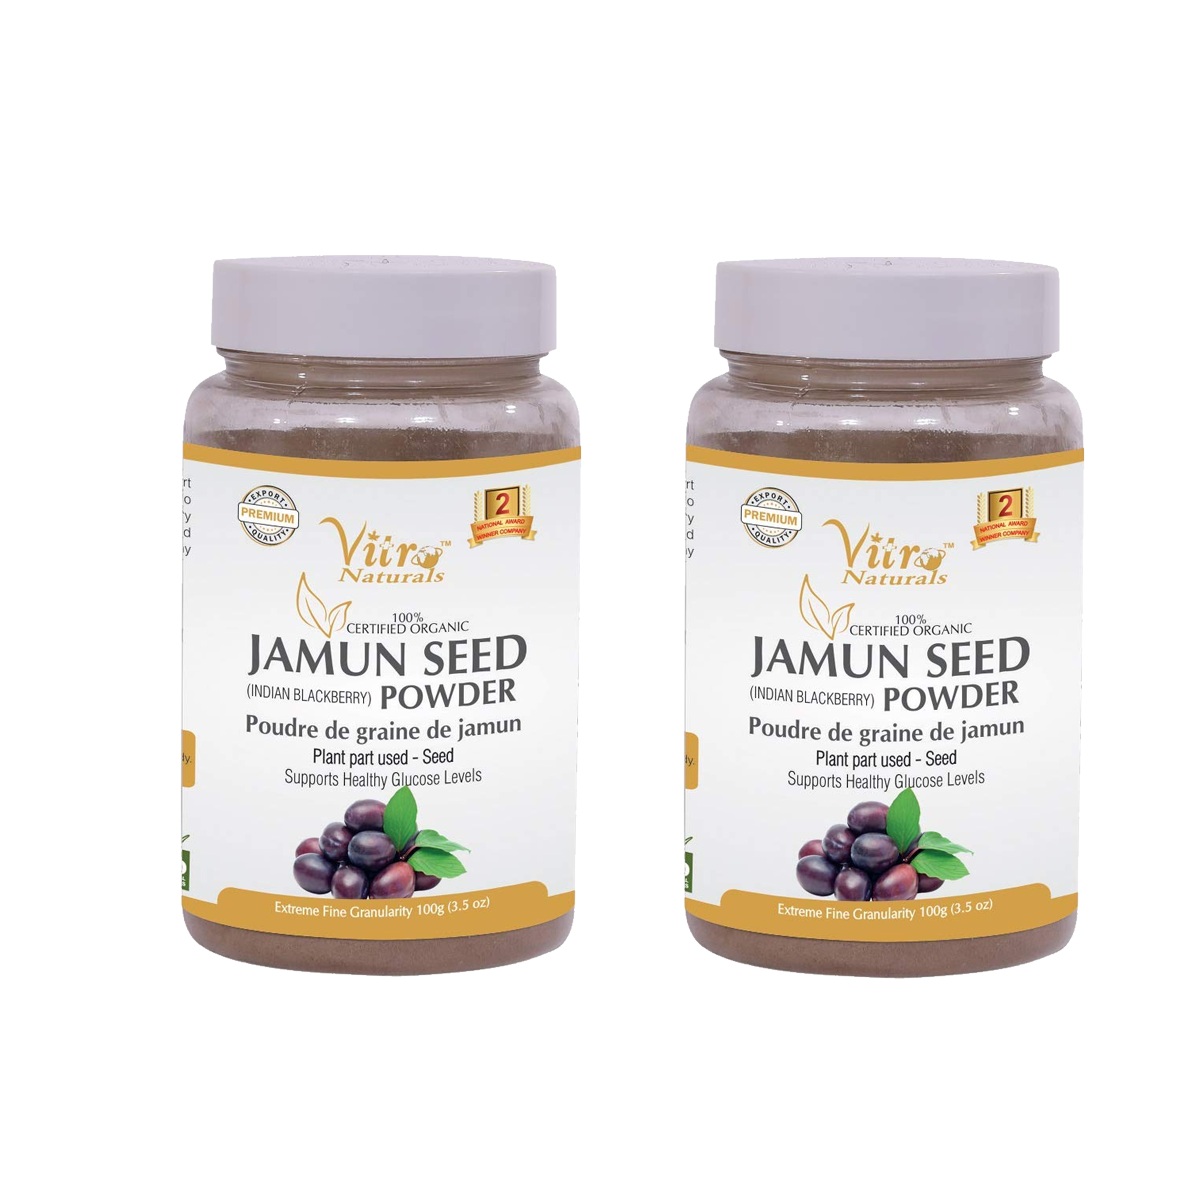 VITRO Organic Jamun Powder 100 gm Pack of 2